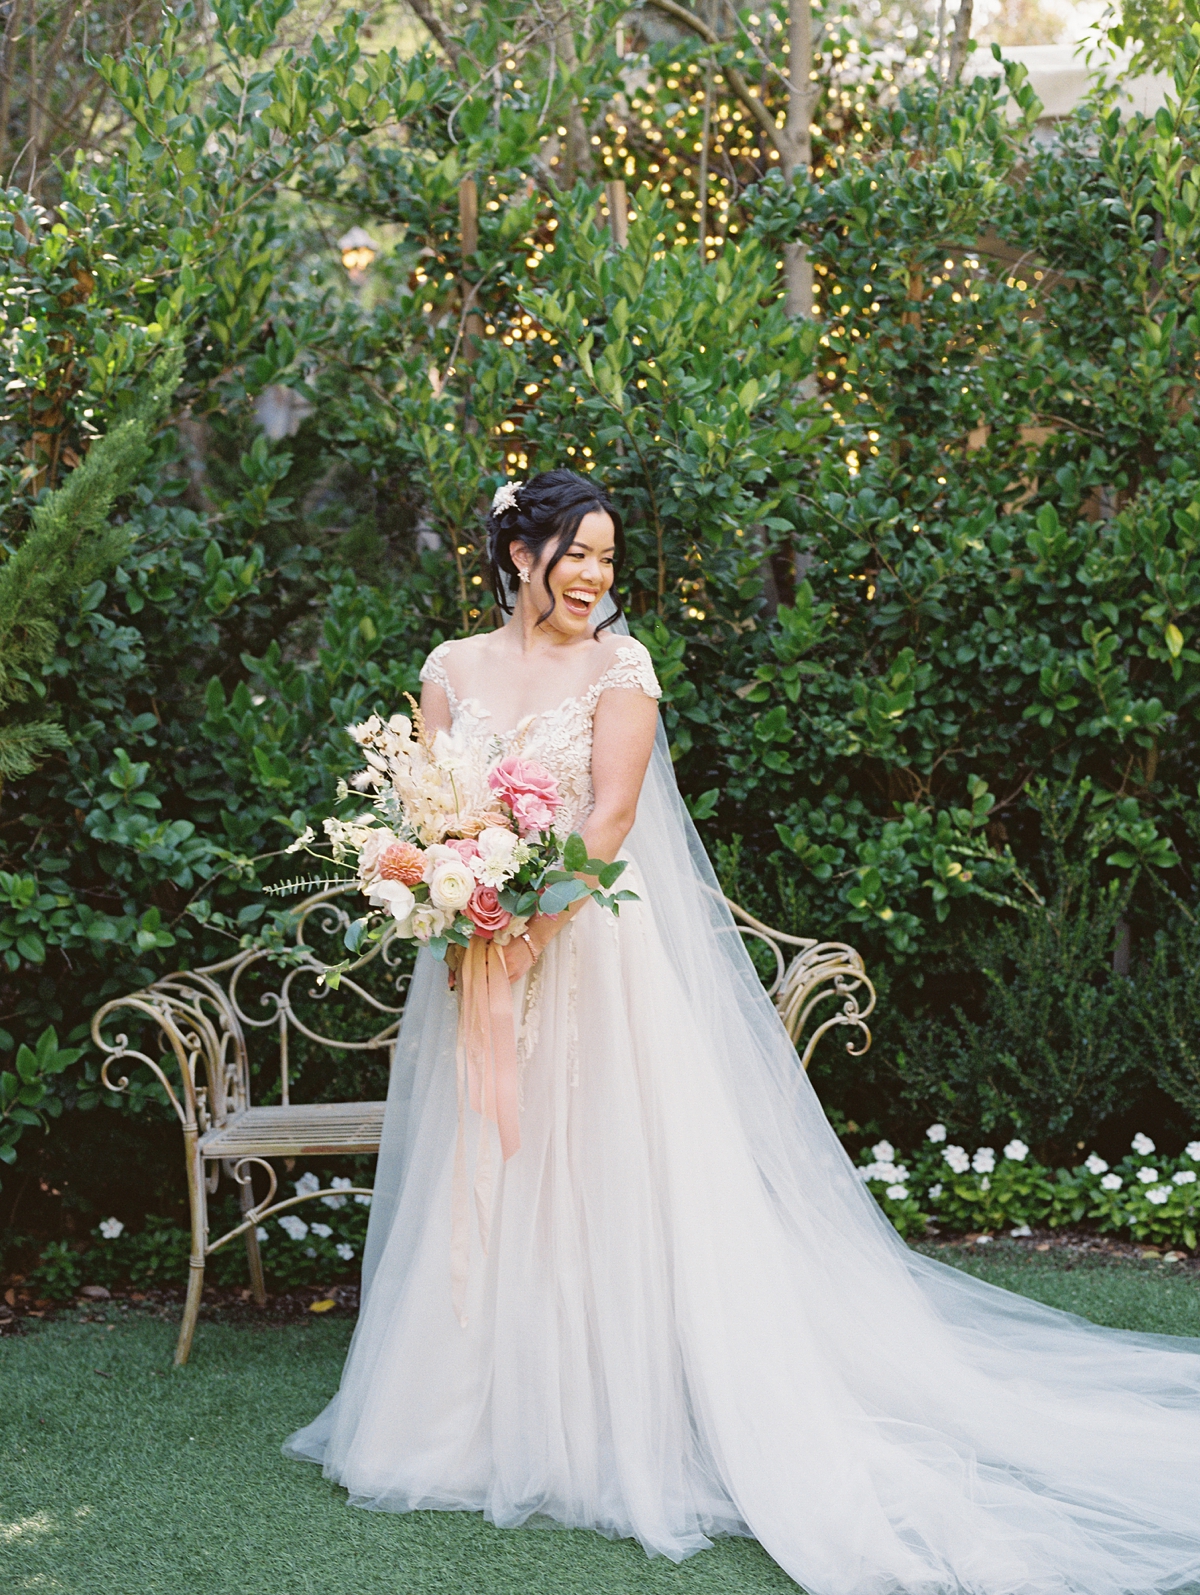 Twin Oaks House Wedding, San Marcos - San Diego Wedding Photographer Jade Maria Photography